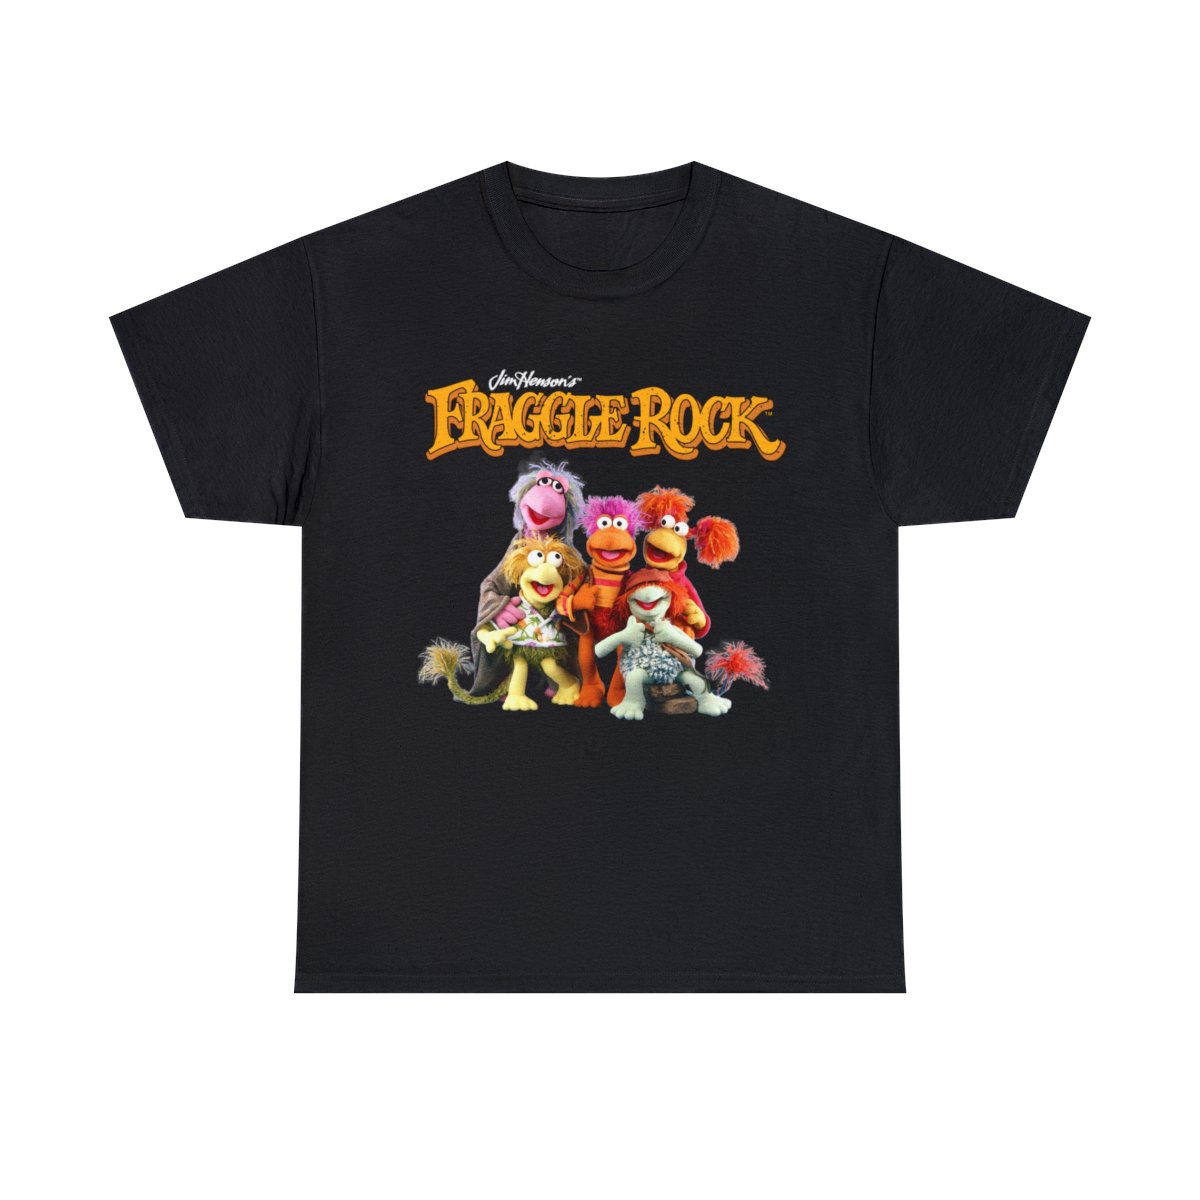 Fraggle Rock Vintage Photo Shirt Jim Henson’s Puppet Characters 80s TV Unisex Heavy Cotton Tee